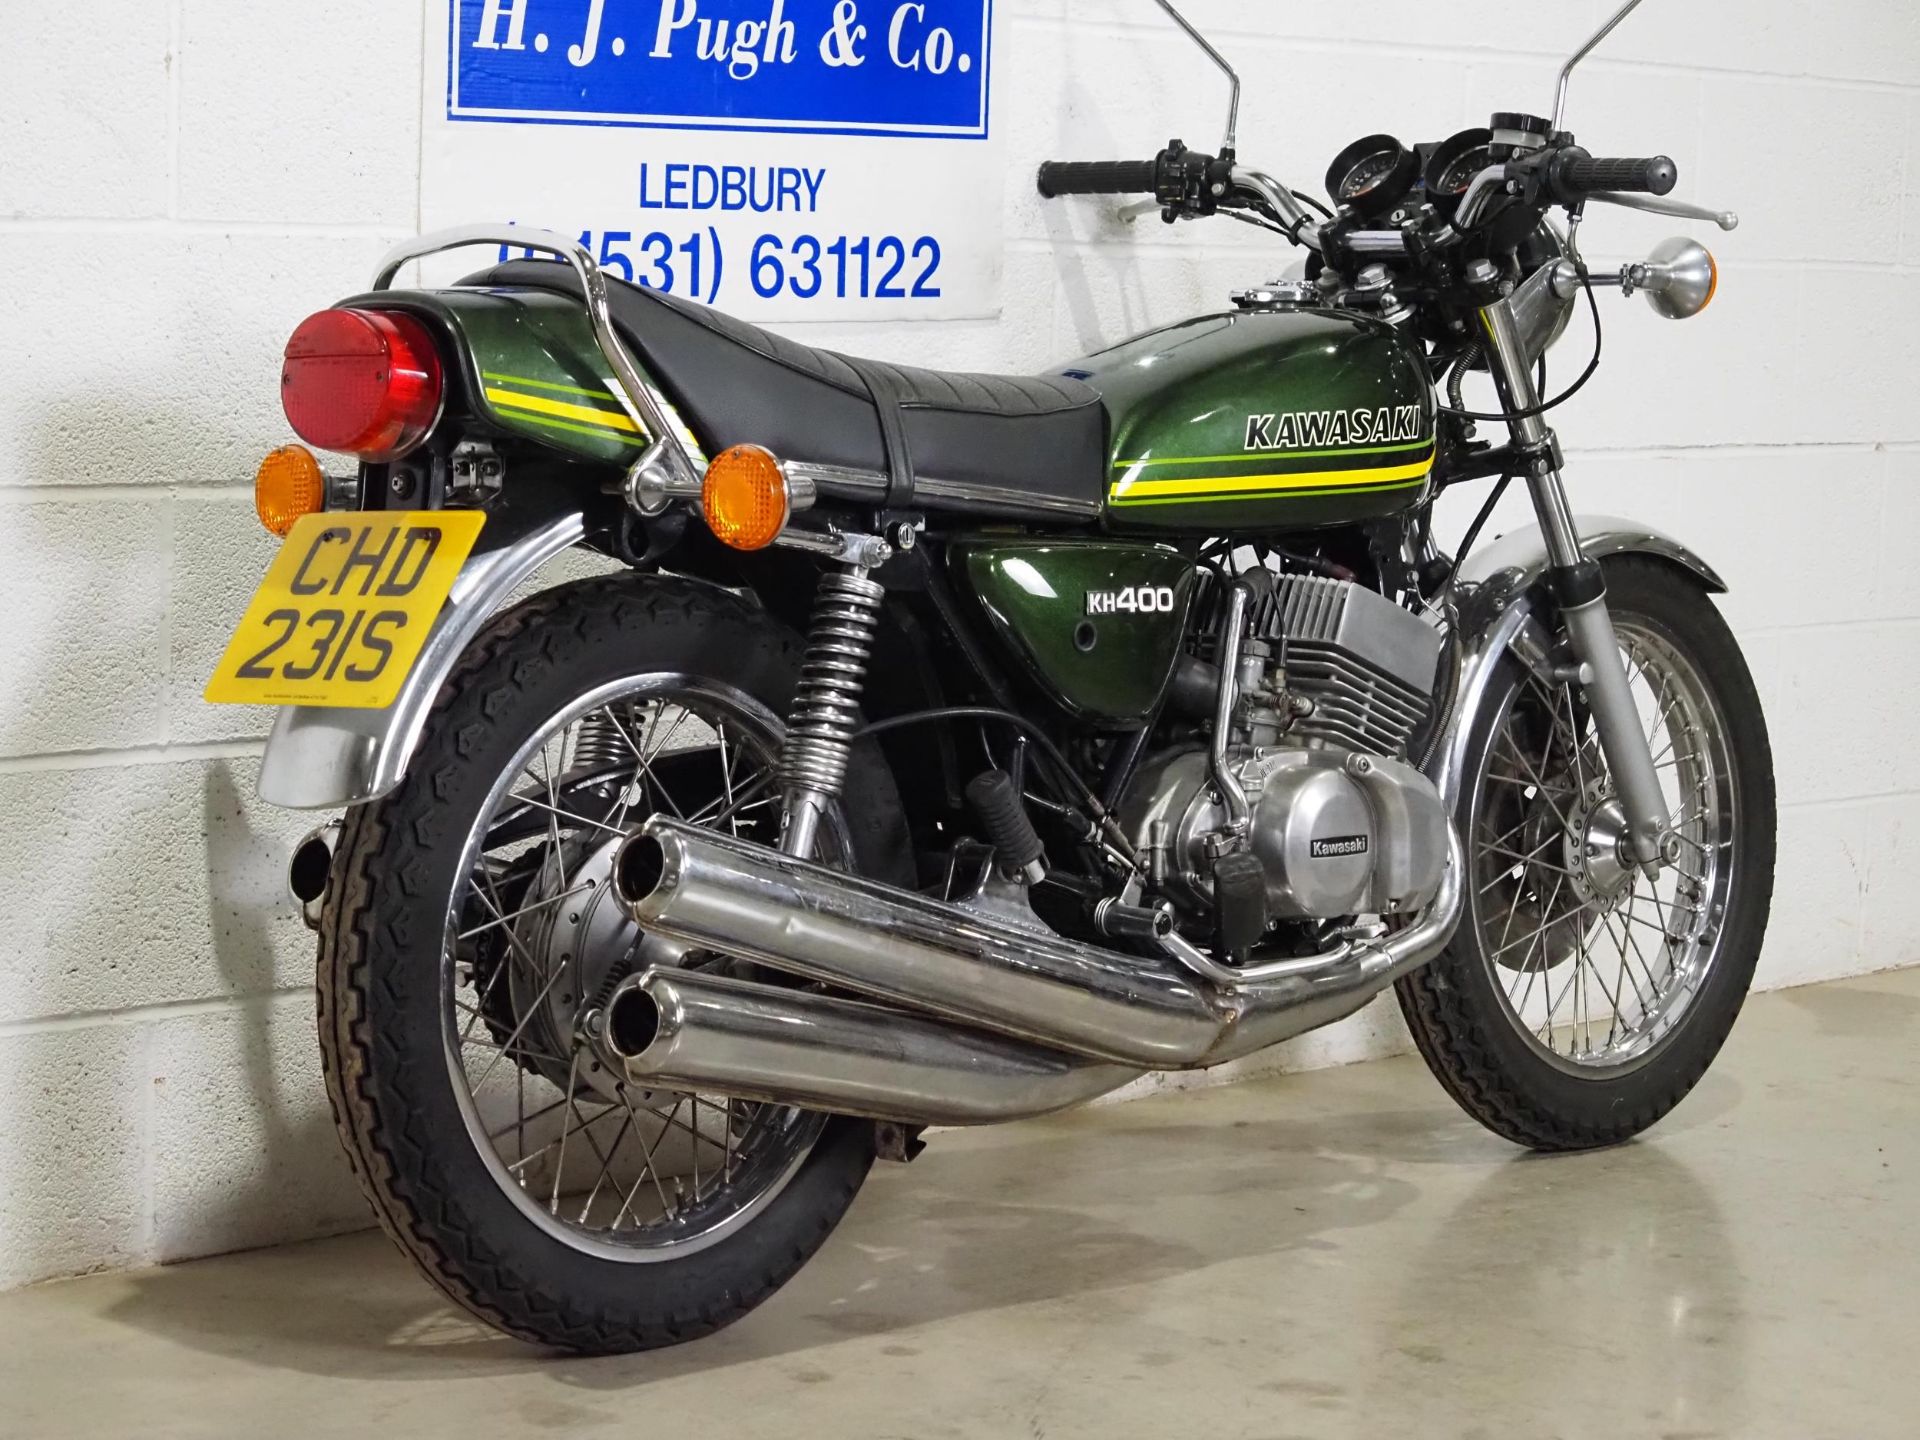 Kawasaki KH400 motorcycle. 1977. 401cc. Frame No. S3F-29604 Engine No. S3E029732 UK supplied bike. - Image 5 of 8